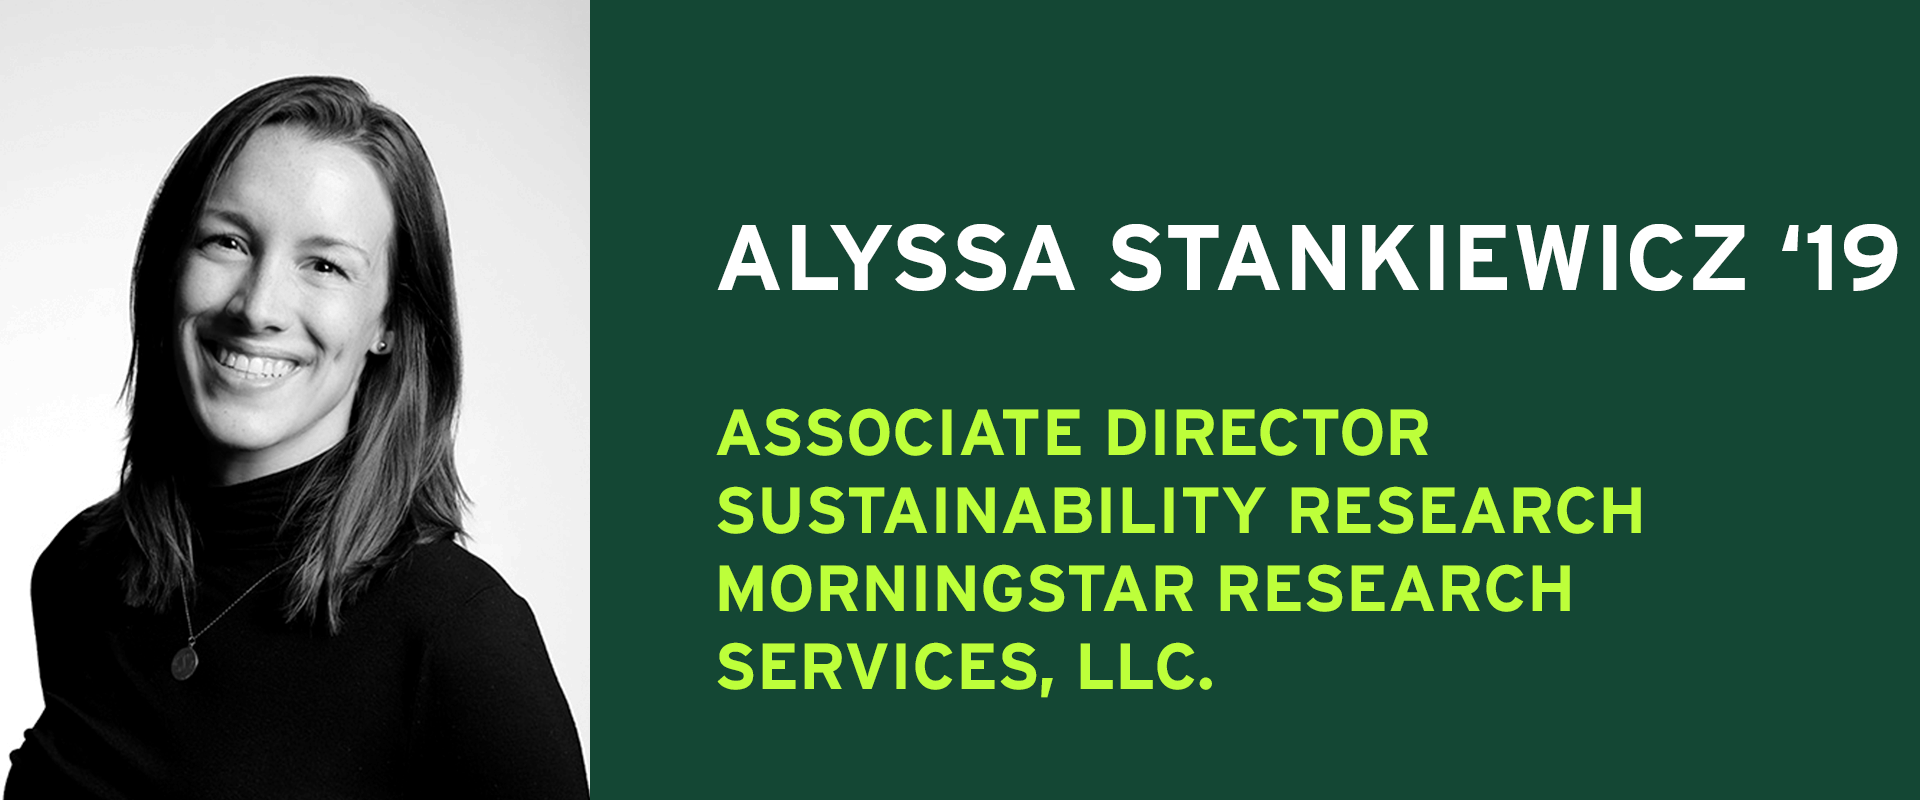 Alyssa Stankiewicz '19 ASSOCIATE DIRECTOR  SUSTAINABILITY RESEARCH  MORNINGSTAR RESEARCH  SERVICES, LLC.